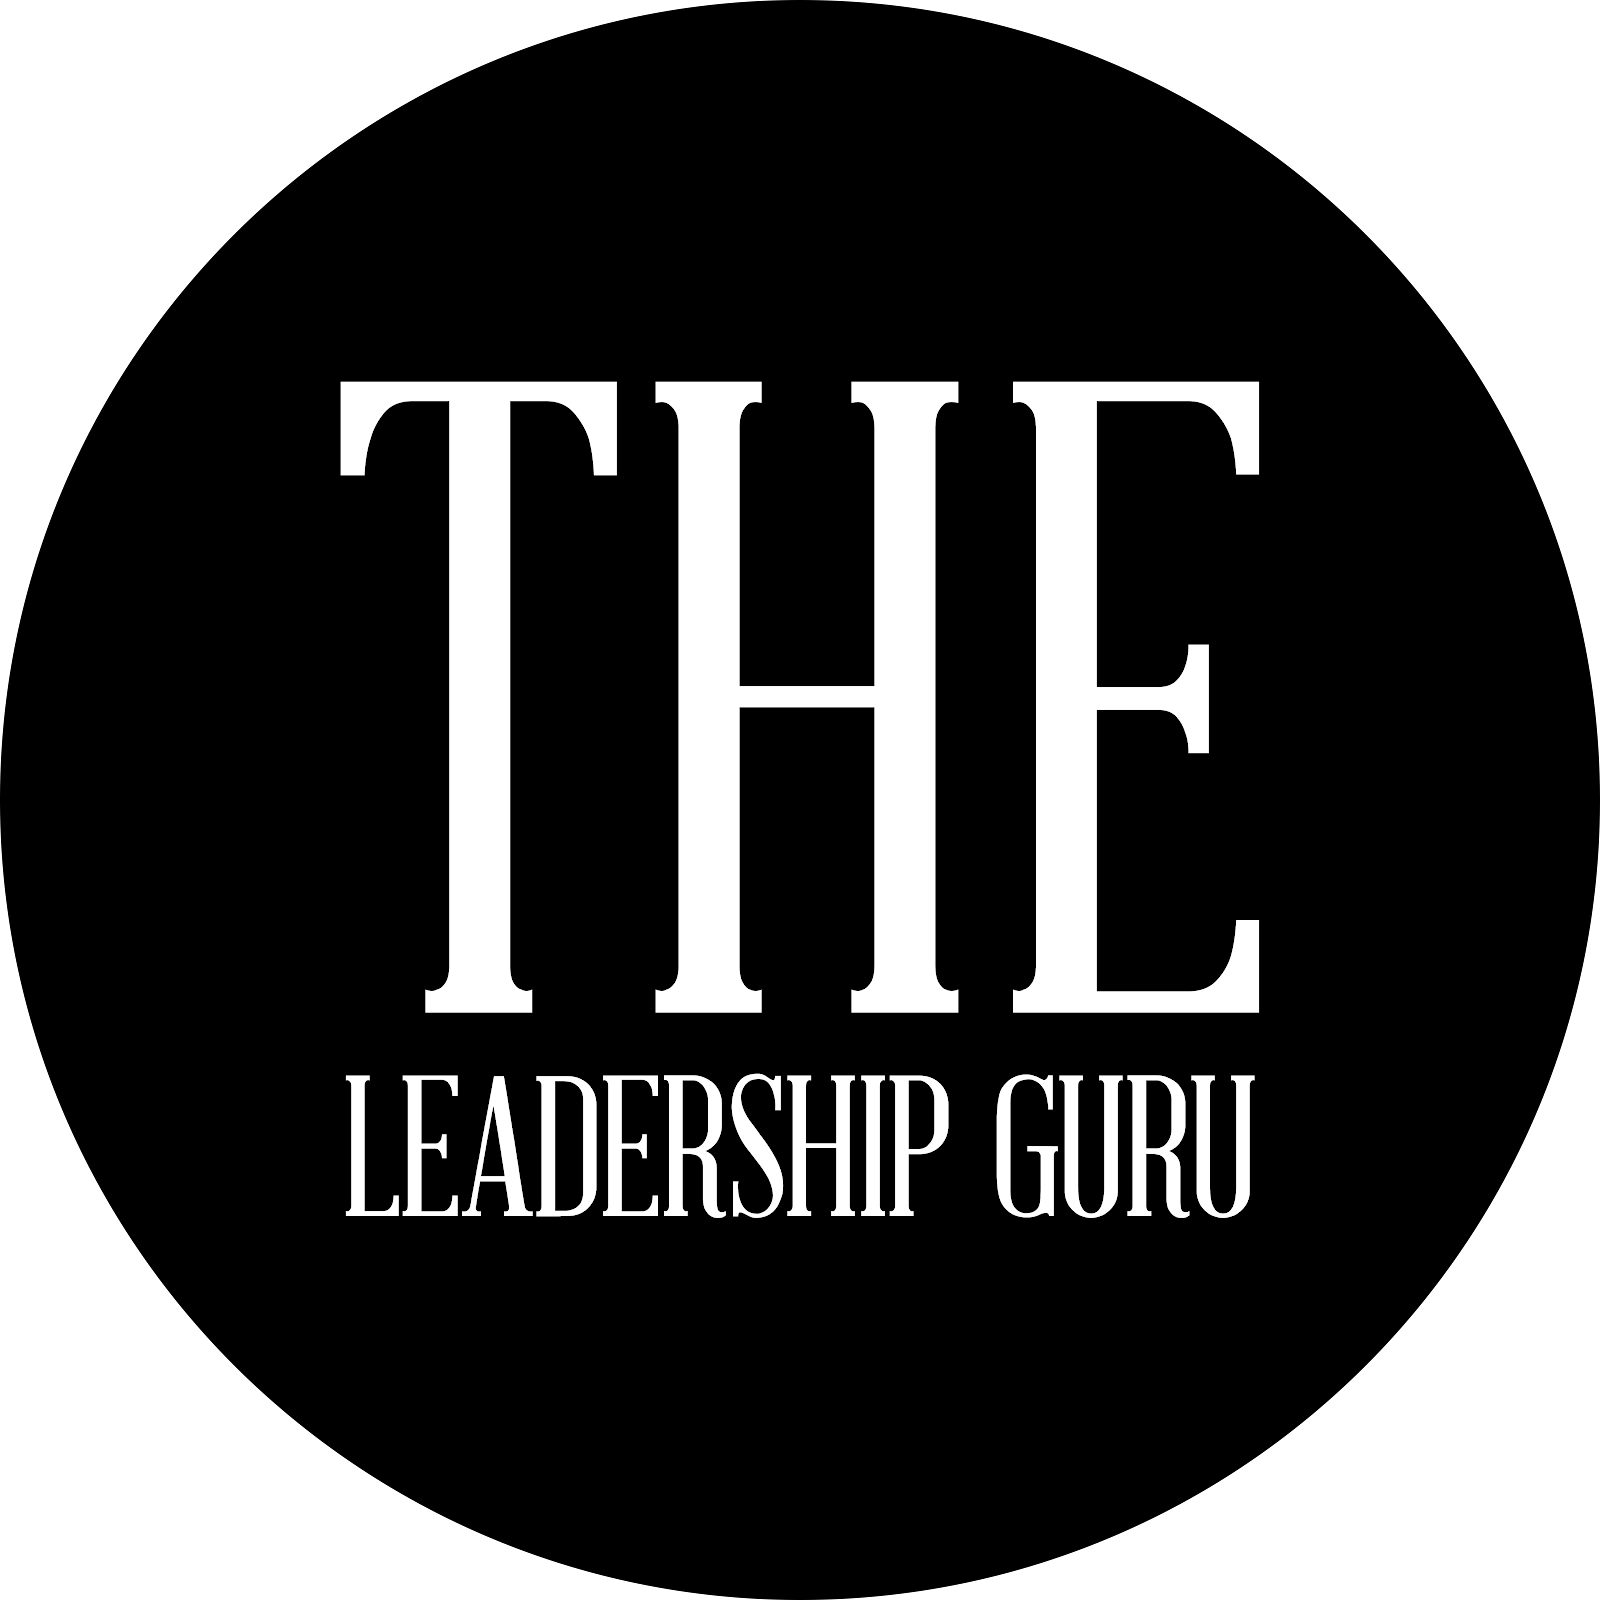 The Leadership Guru logo